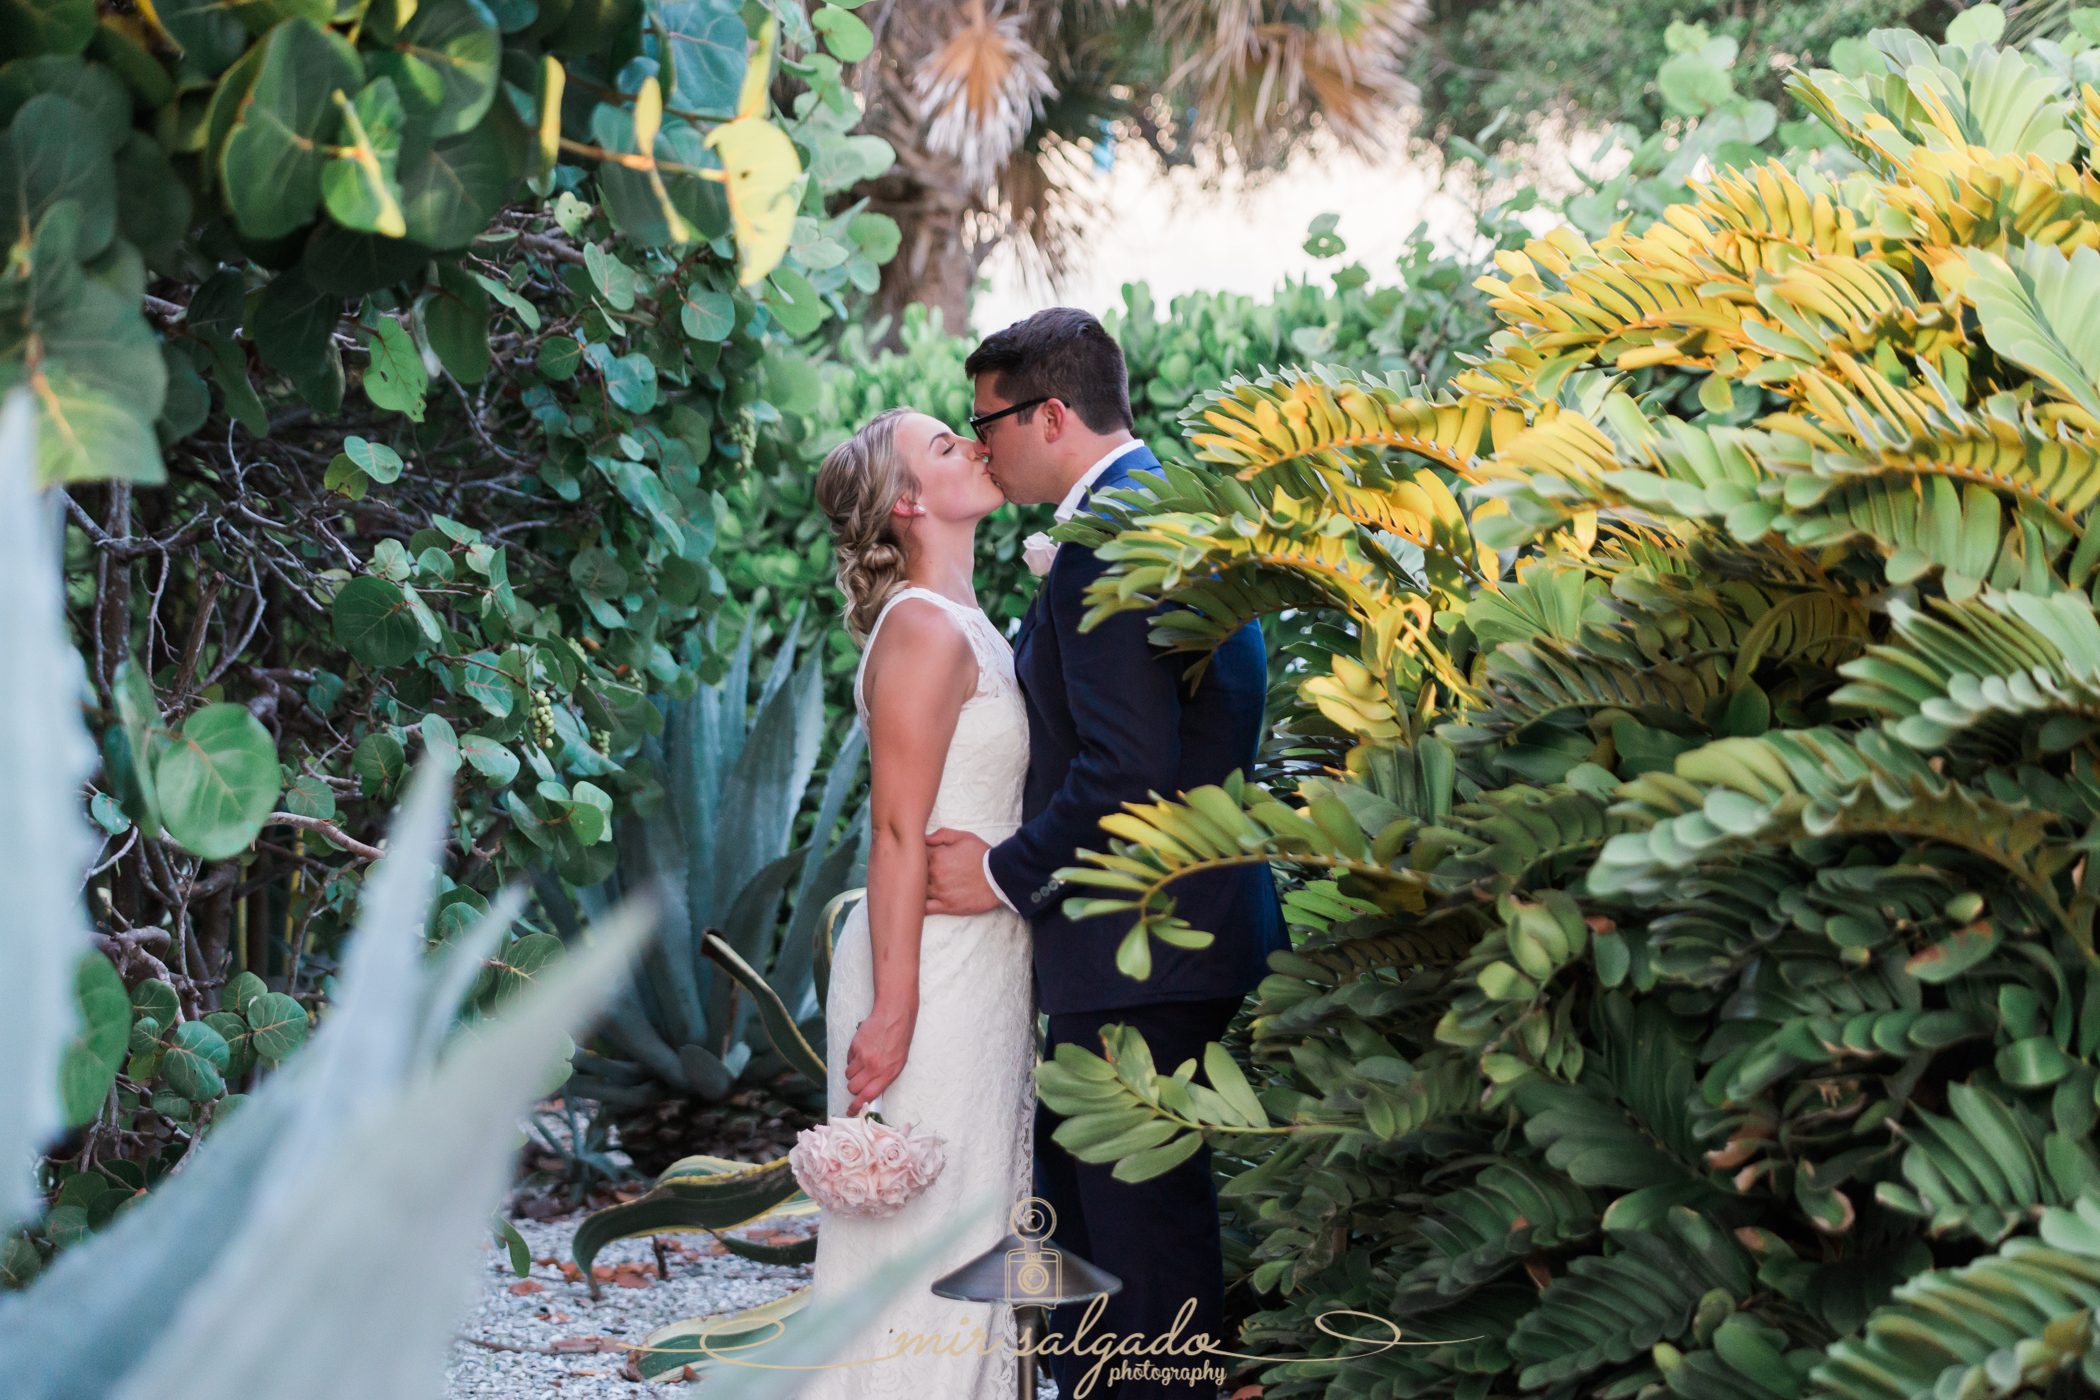 garden-backdrop, unique-wedding-backdrops, plant, wedding-portraits, outdoor-wedding-photography